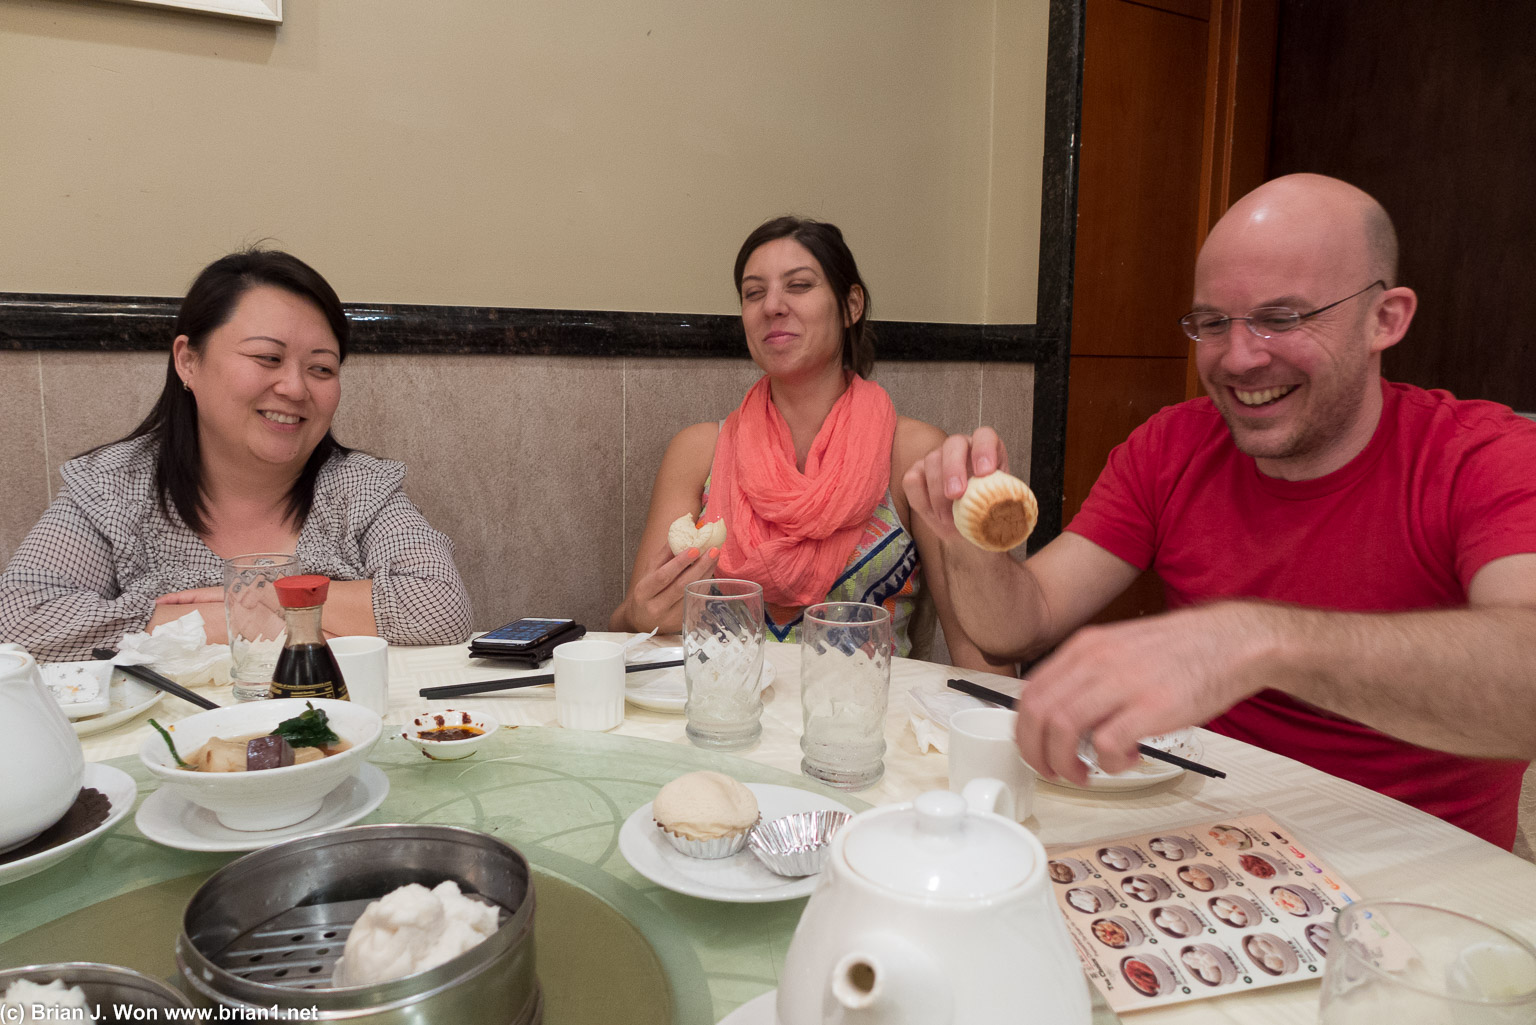 Sue, Carolina, and Dan laughing about Dan not recognizing his favorite dessert.